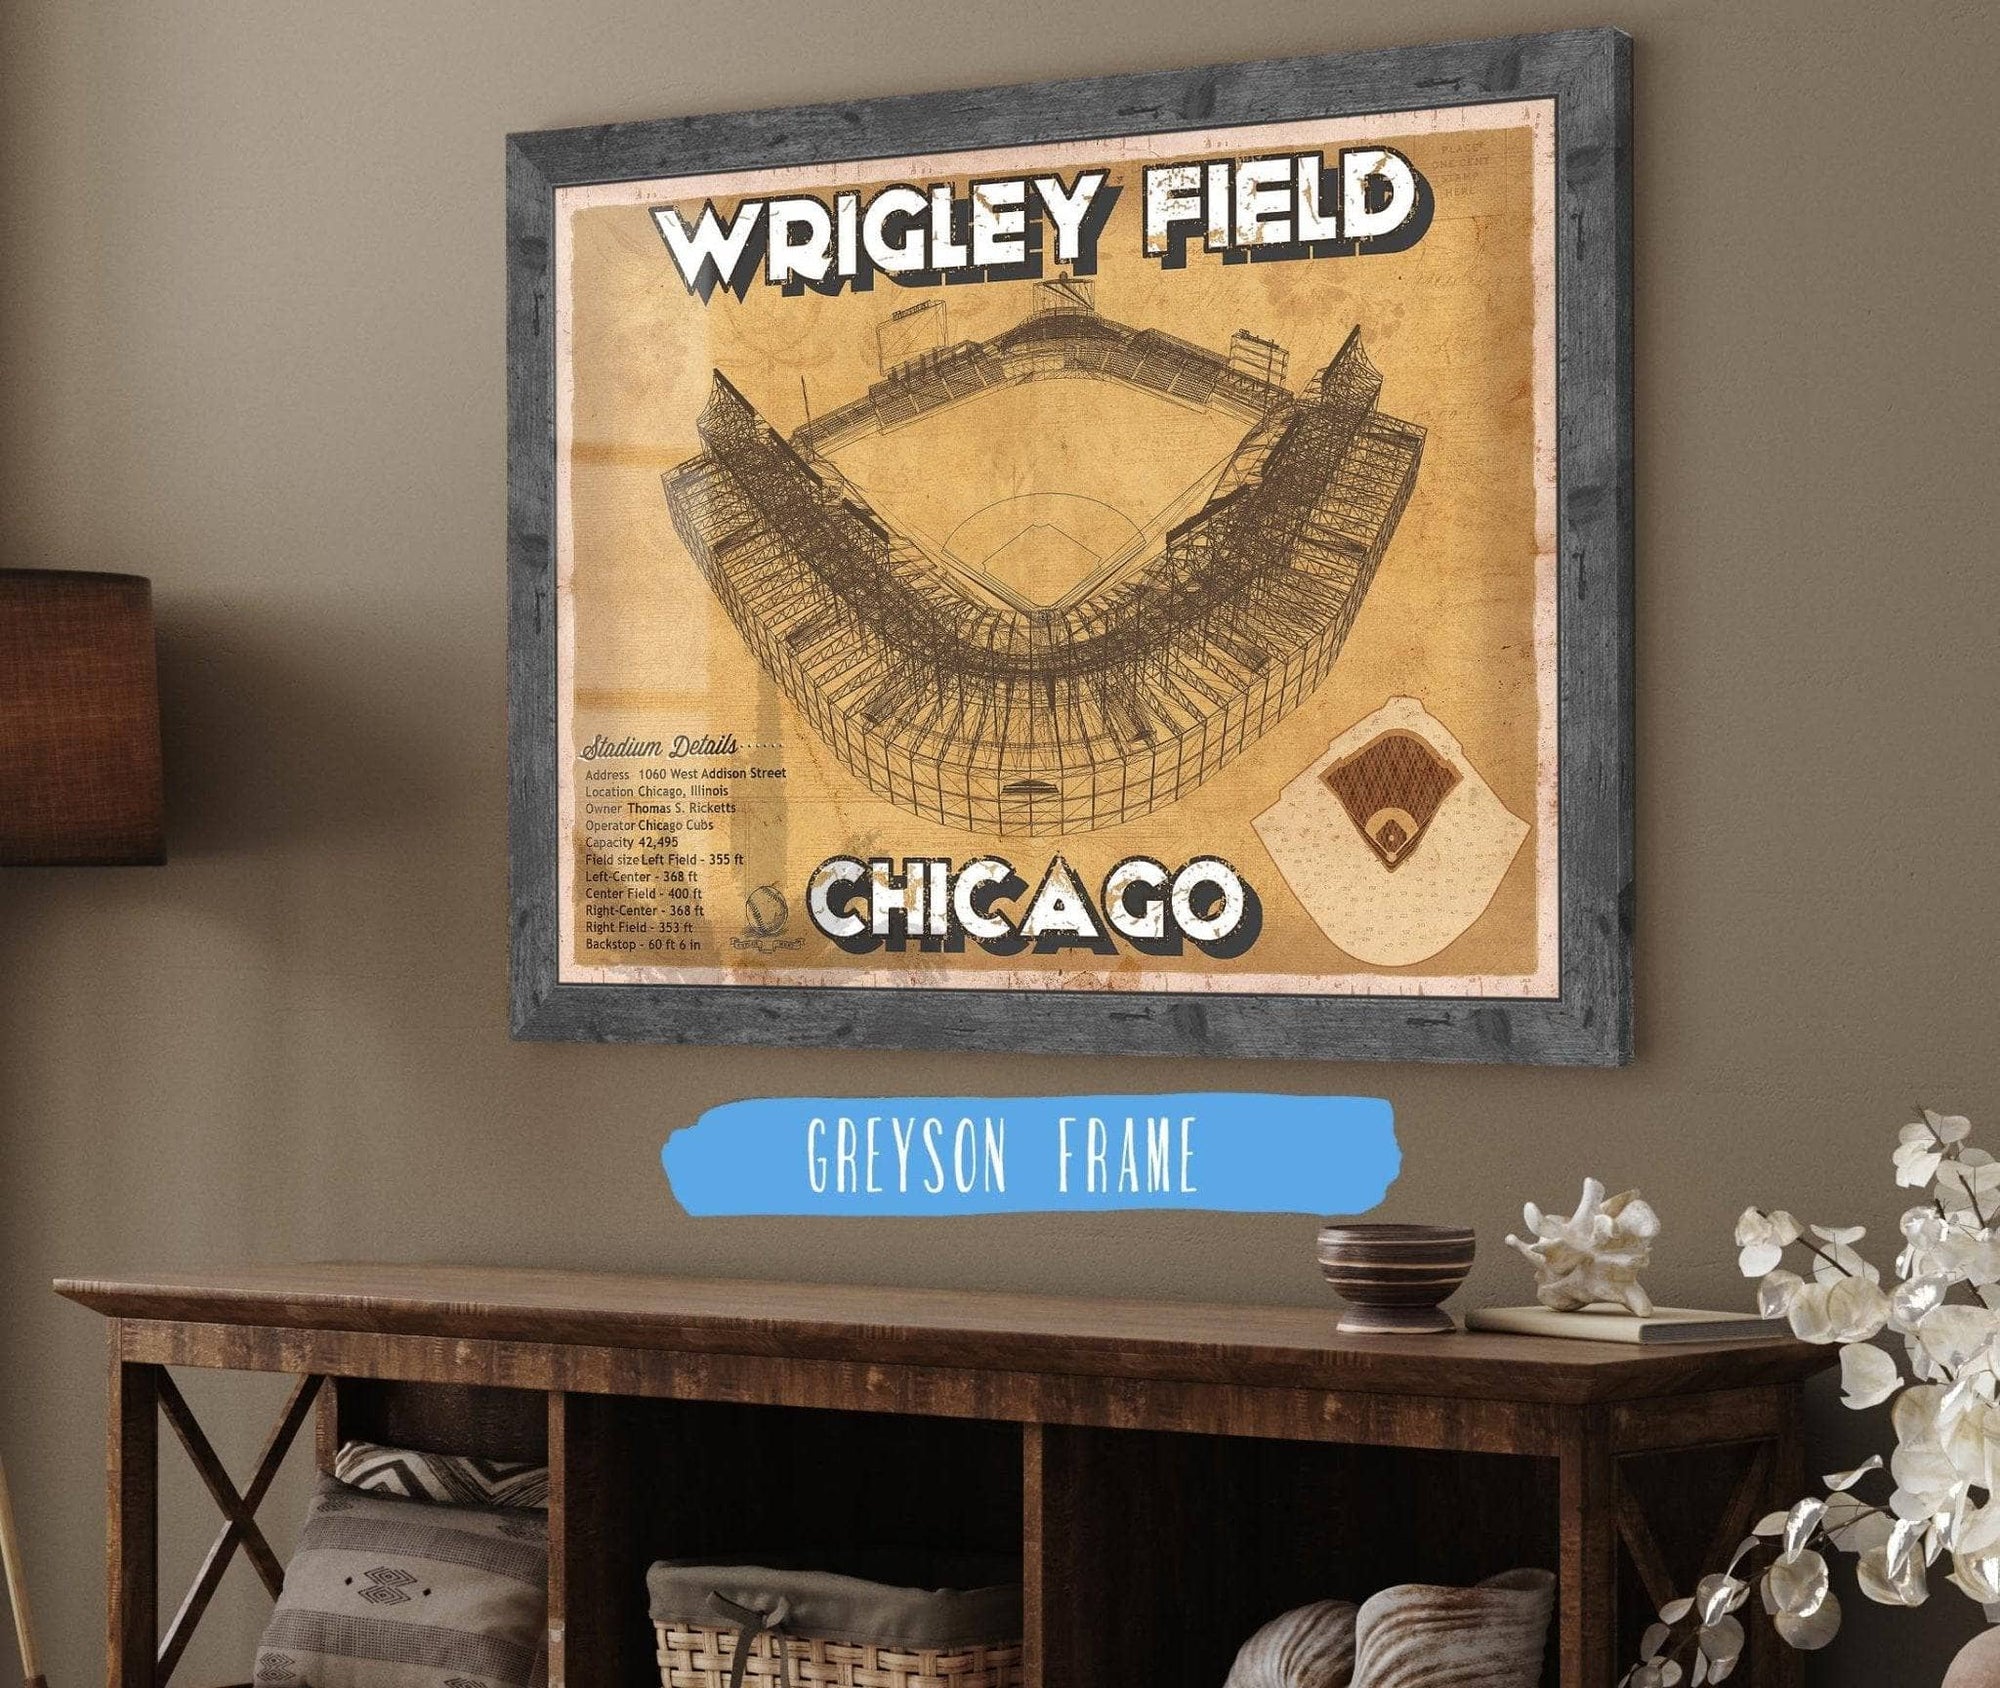 Cutler West 14" x 11" / Greyson Frame Wrigley Field Print - Chicago Cubs Baseball Print 703108870-14"-x-11"6800